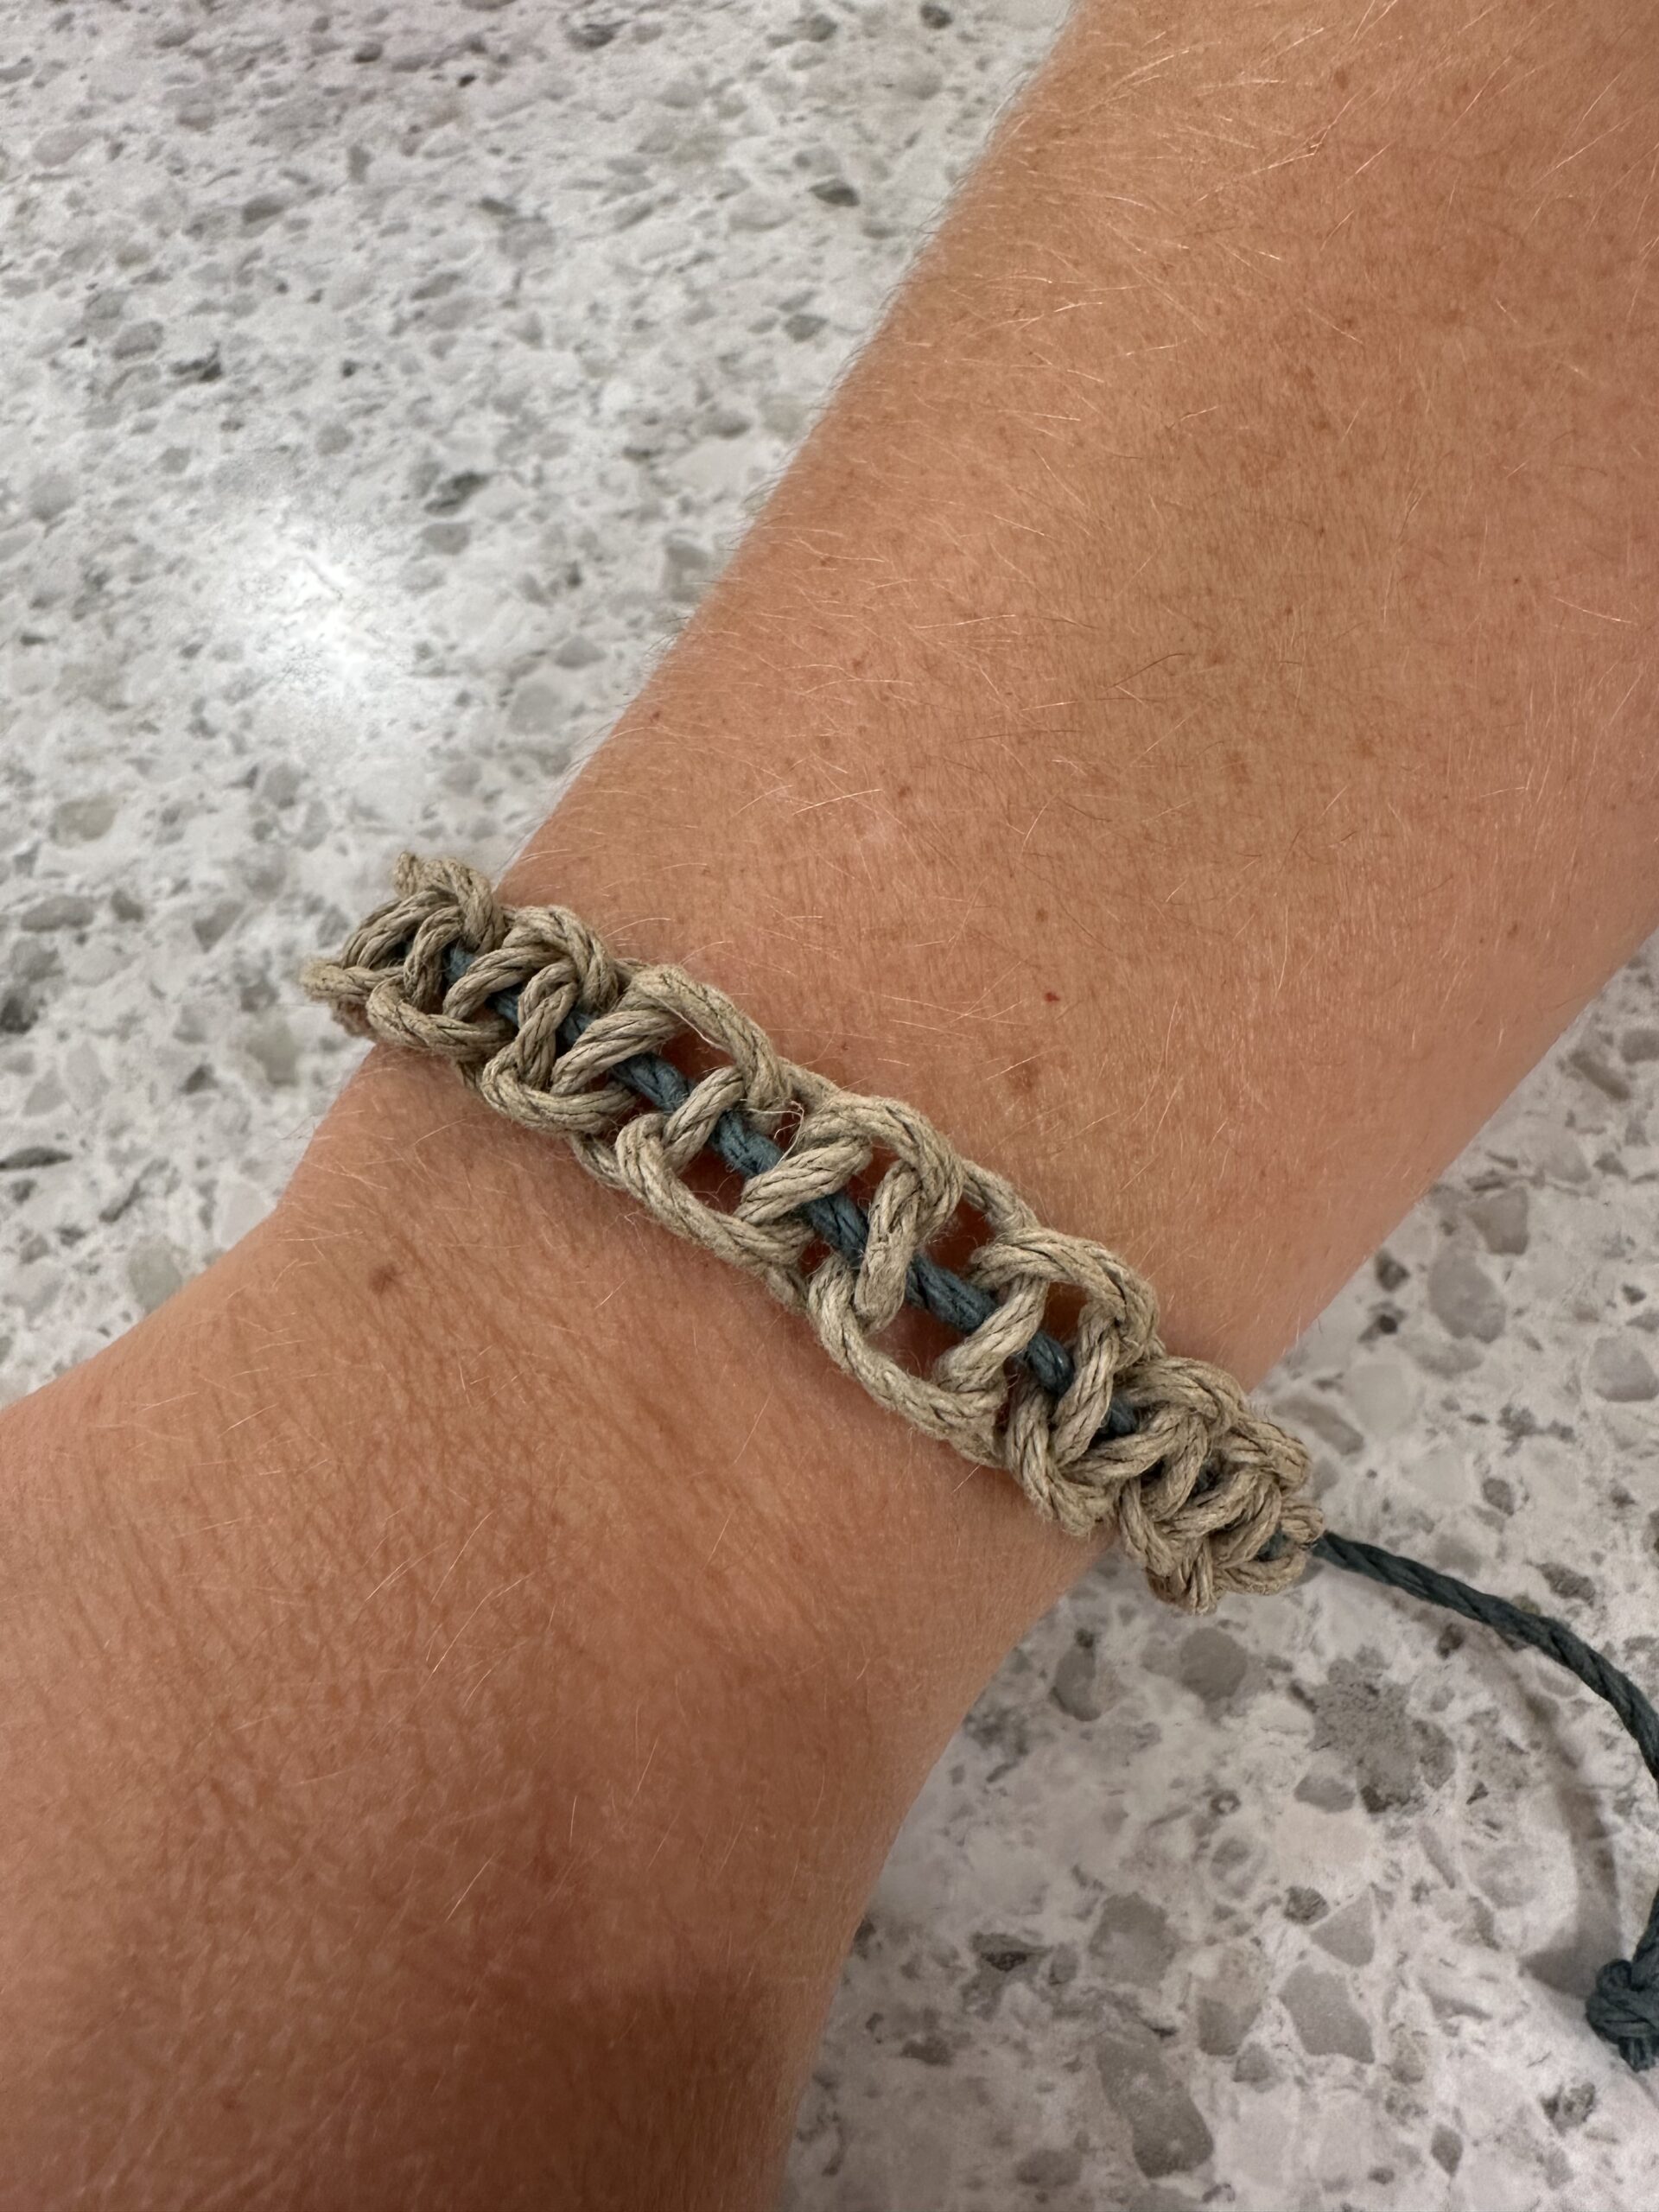 How To Make A Hemp Cord Bracelet